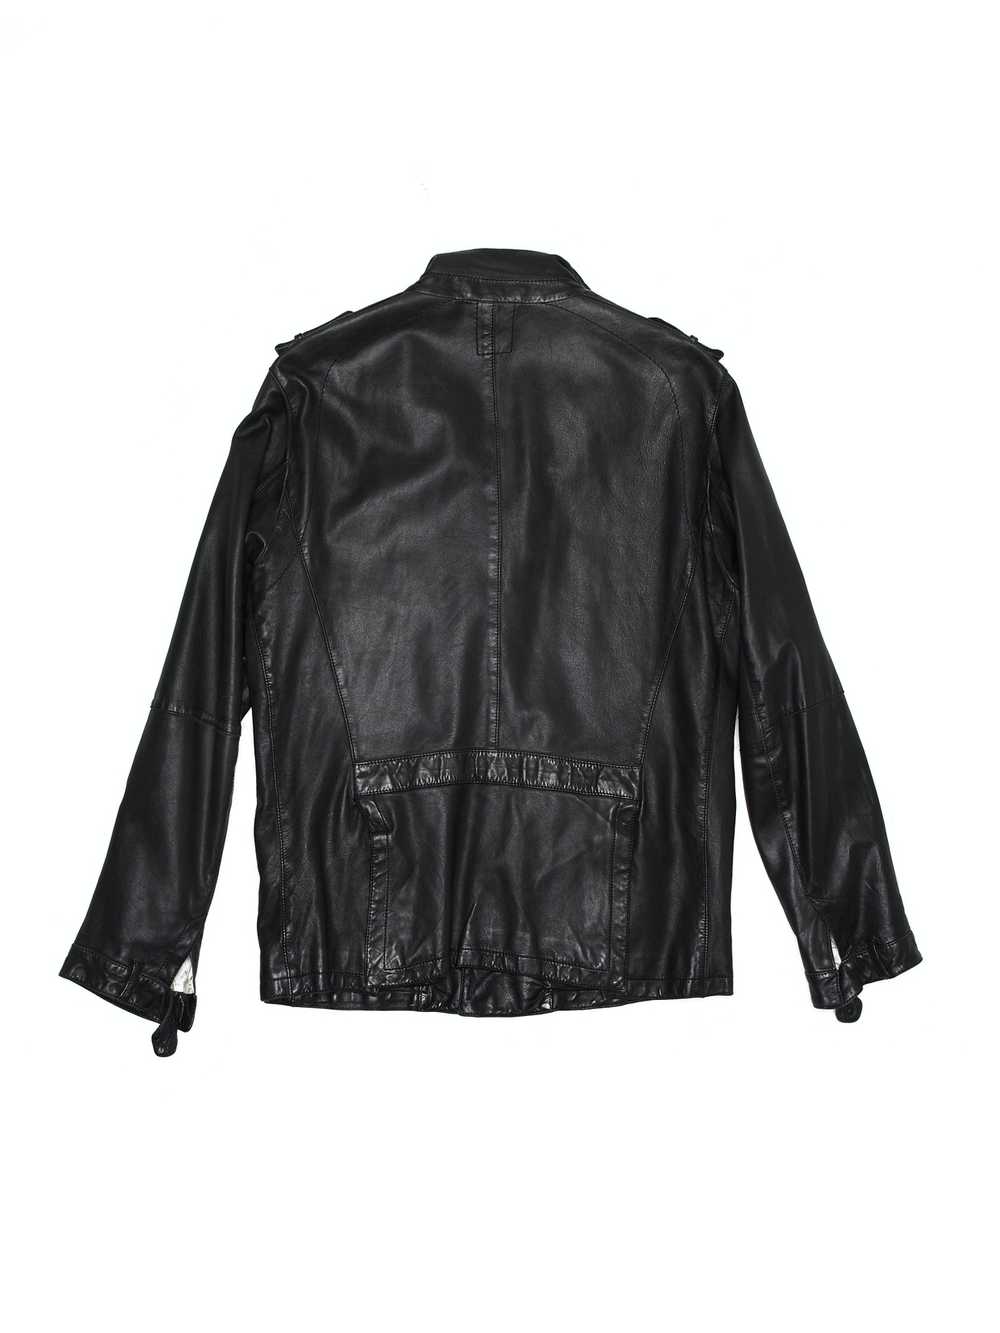 Neil Barrett Leather Jacket - image 2